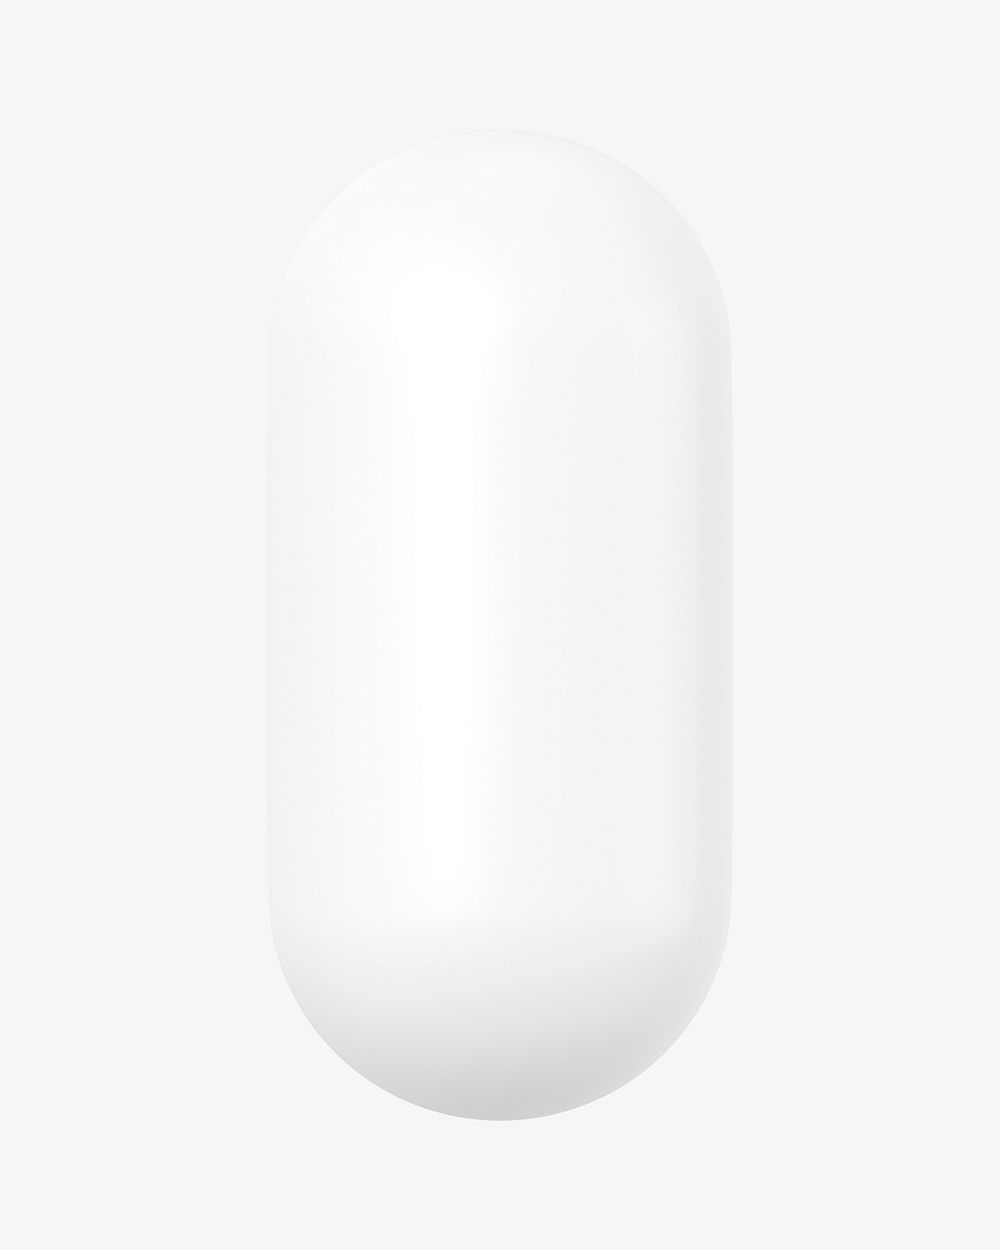 3D white capsule, geometric shape